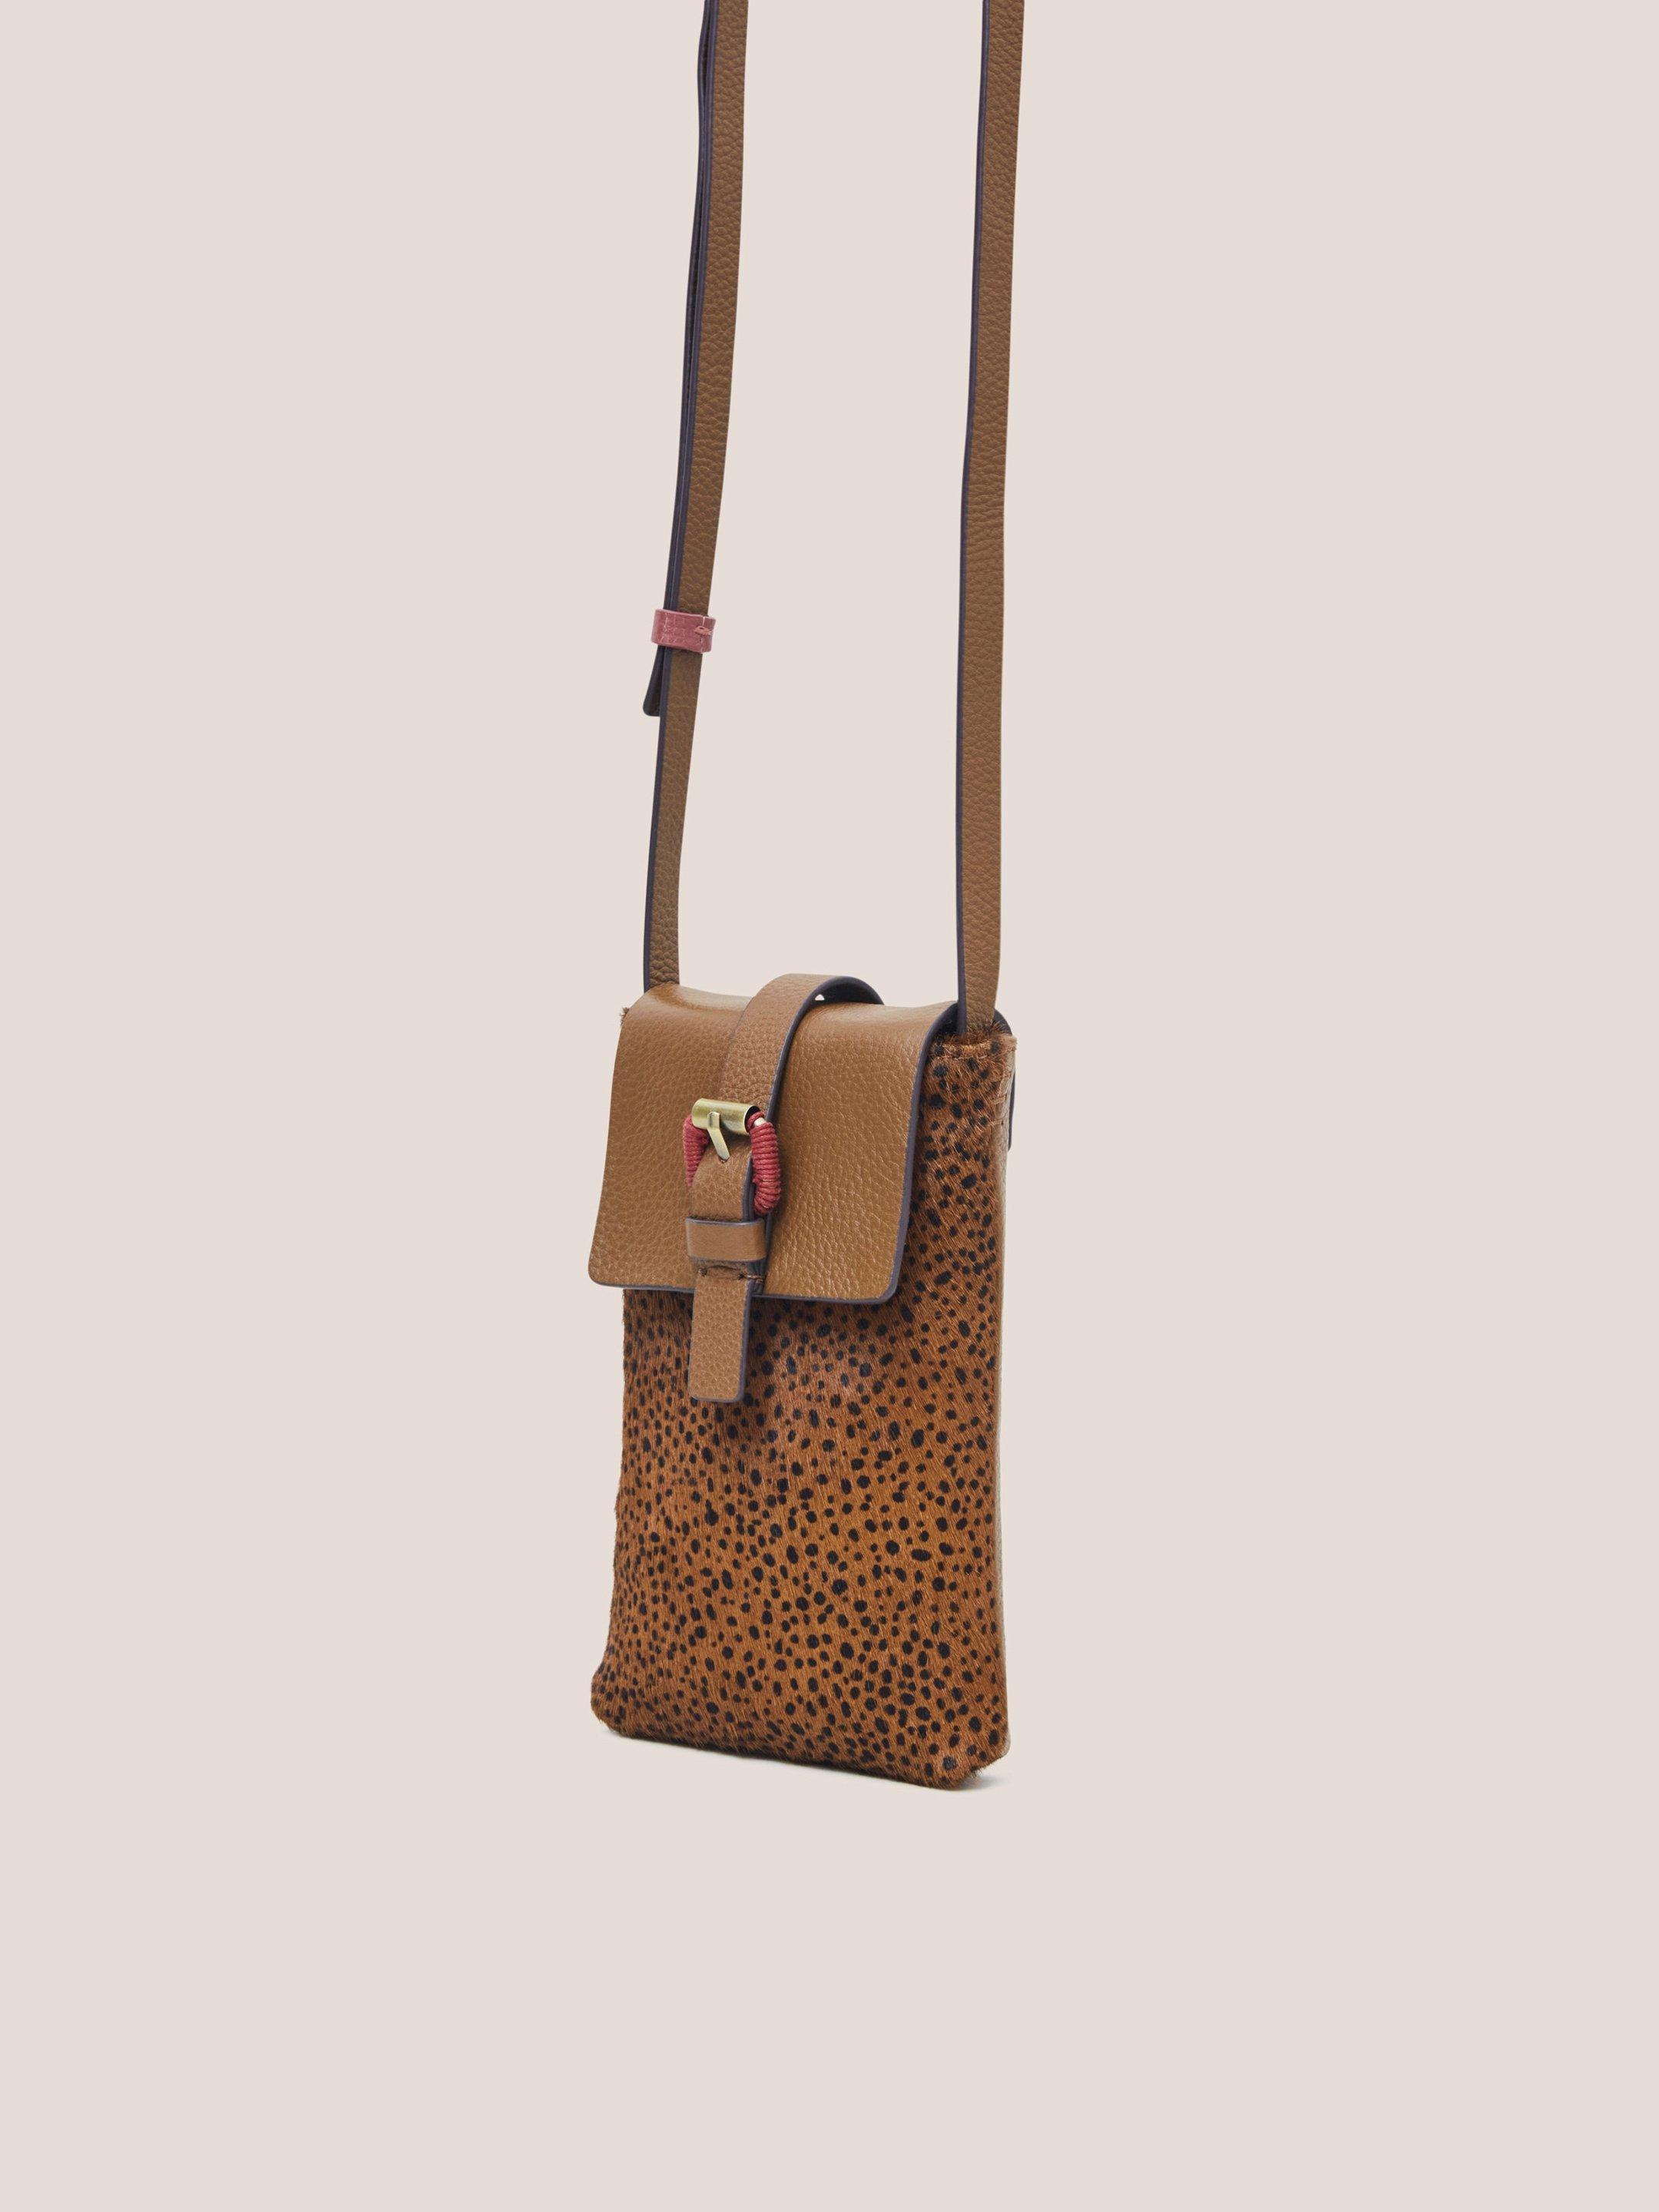 Clara Buckle Leather Phone Bag in TAN PR - FLAT DETAIL